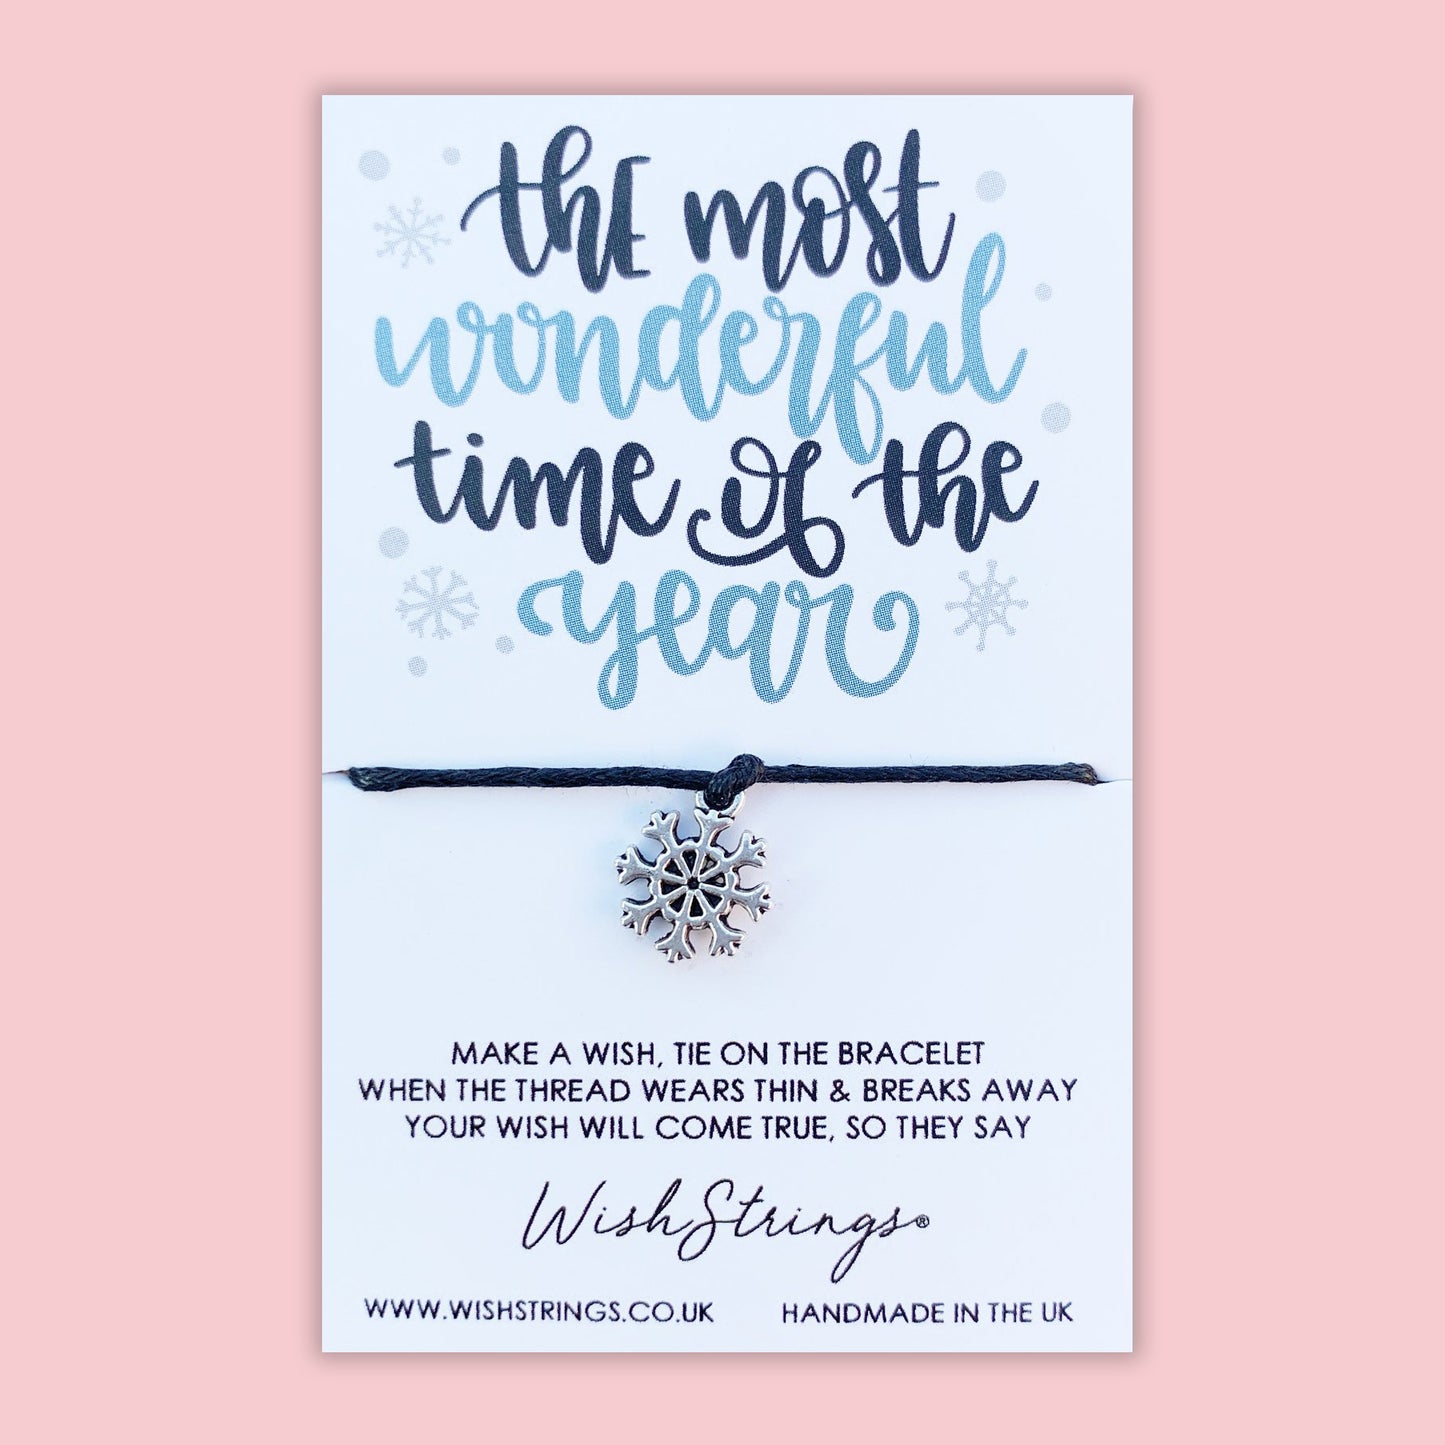 Wonderful Time of Year - WishStrings Wish Bracelet